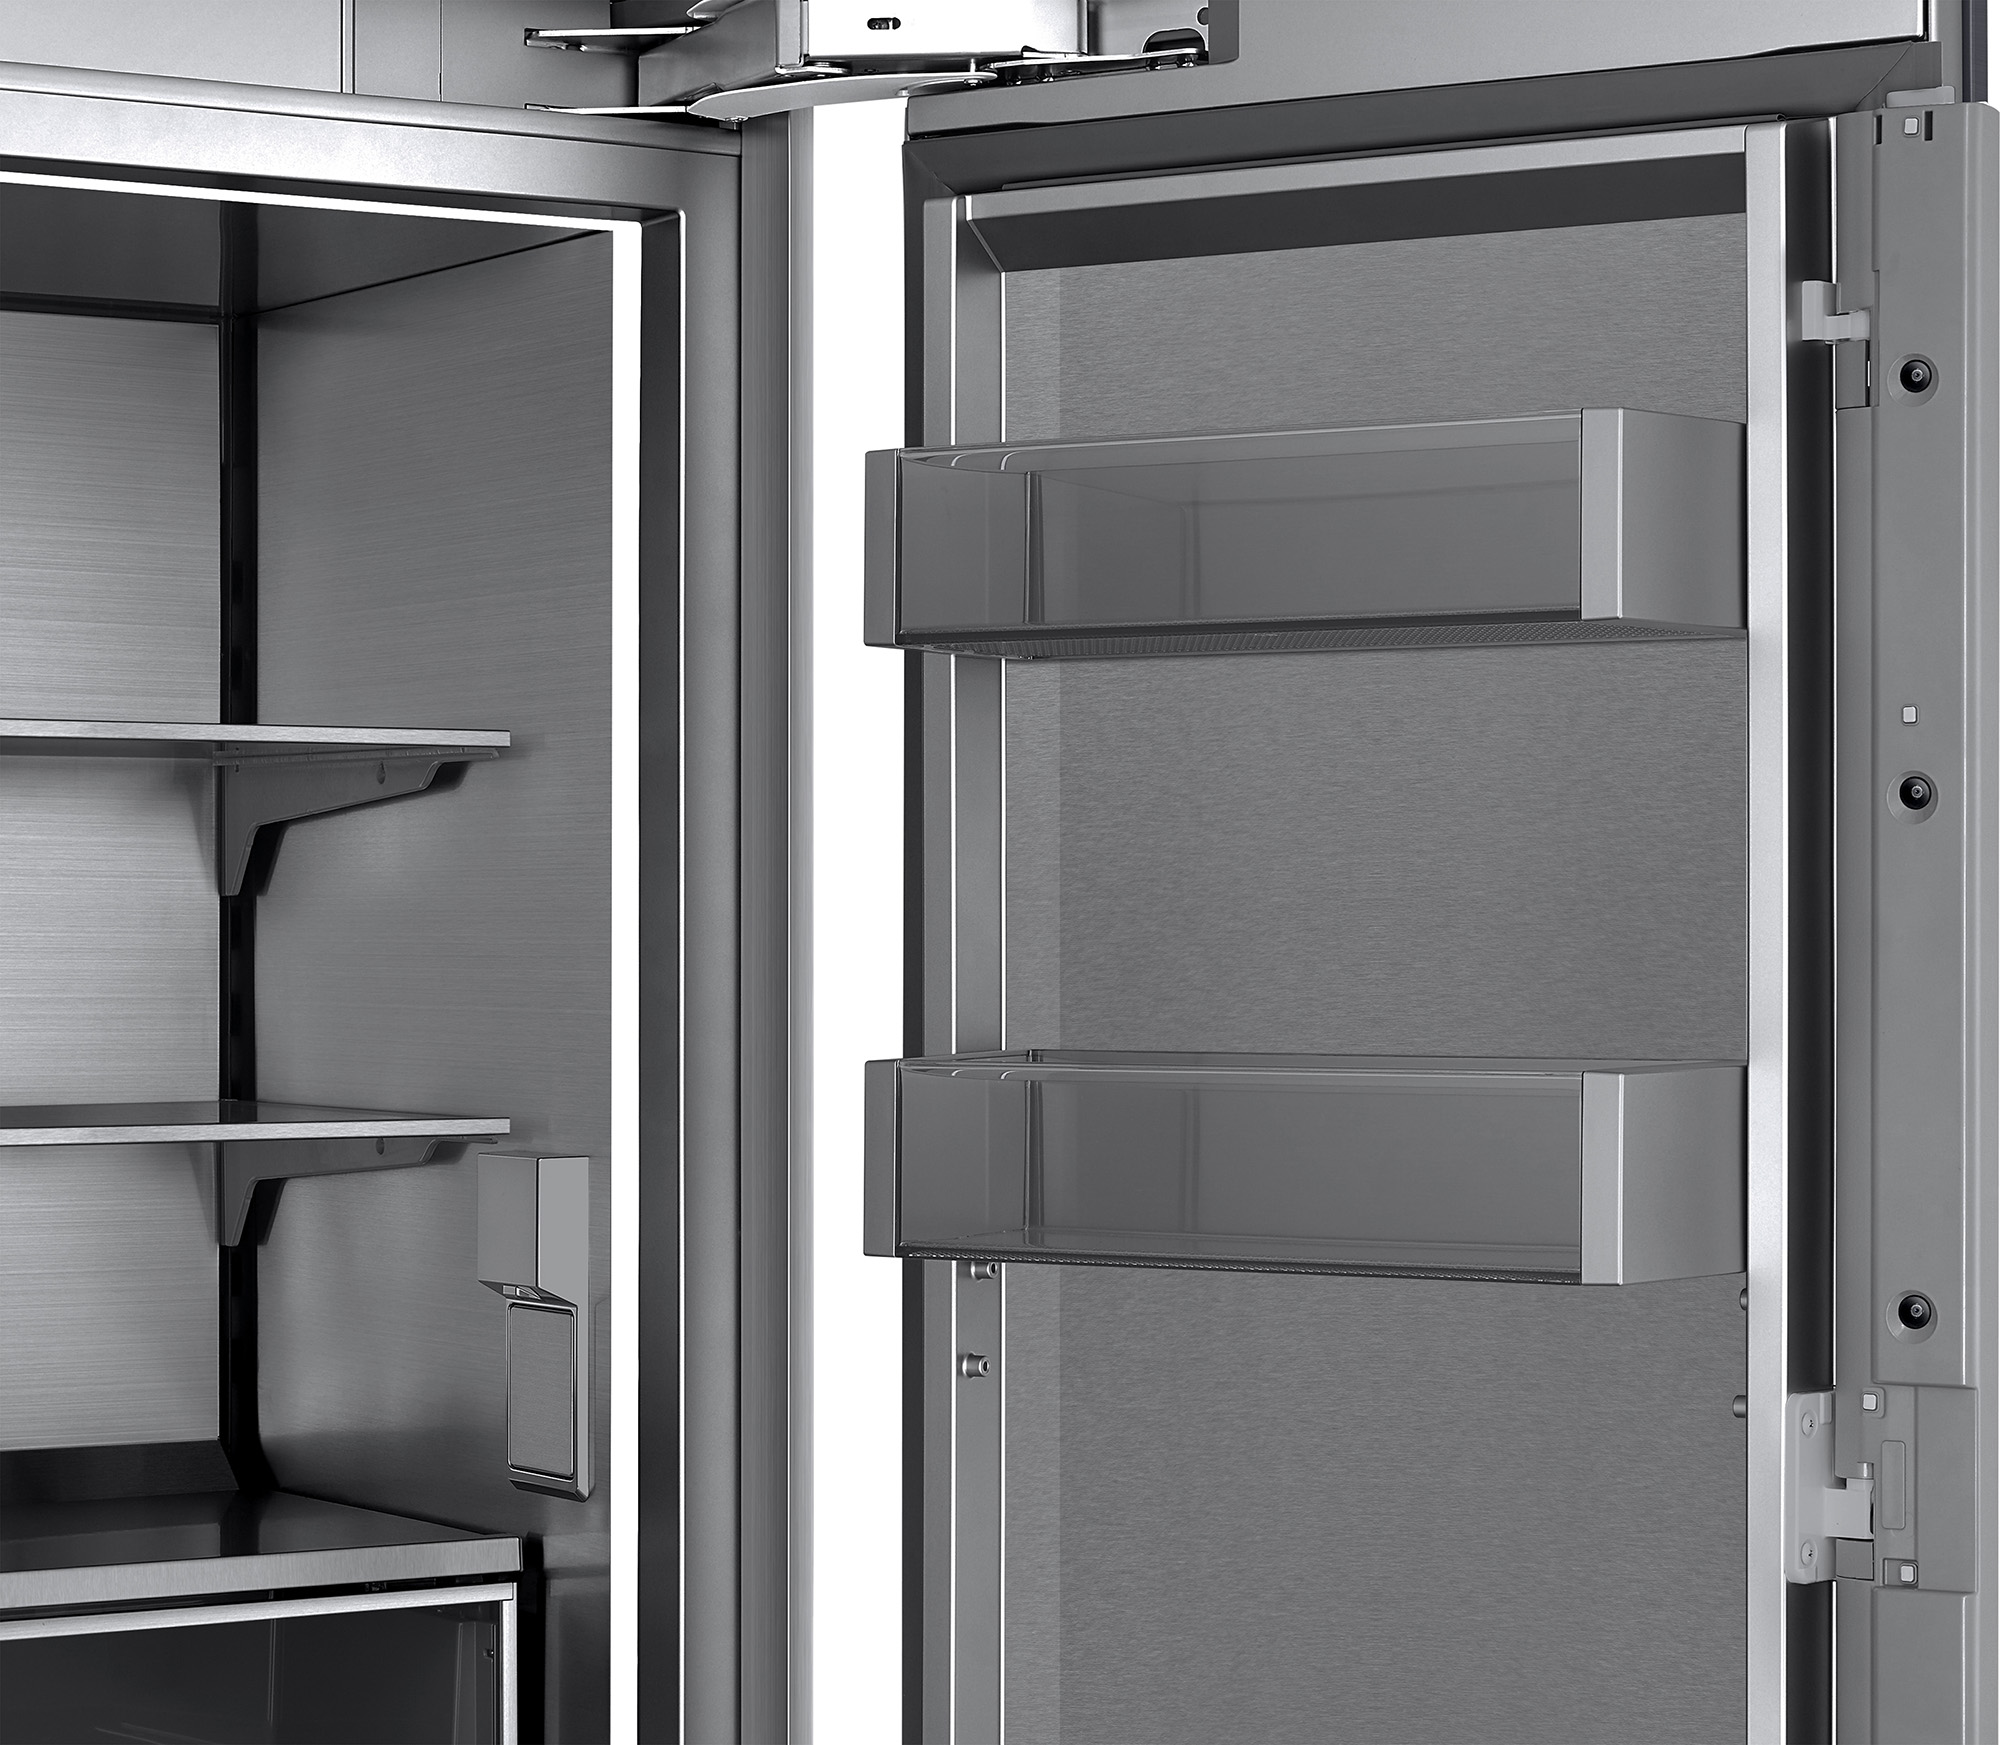 Dacor refrigerator BRF9000